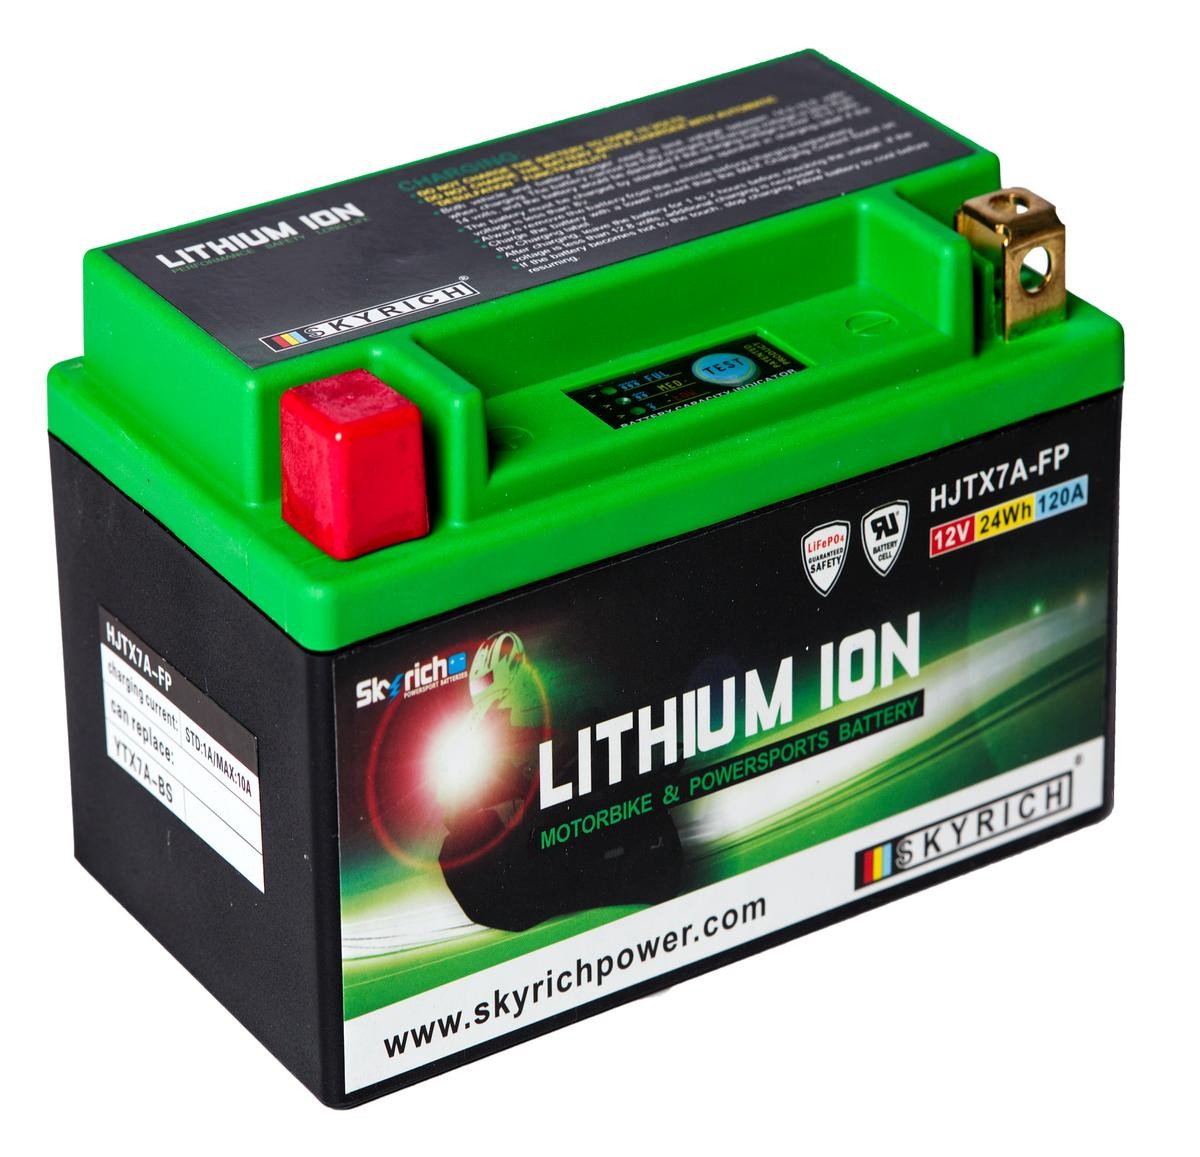 BAOTIAN 8B Batterie 12V 2Ah 120A N Li-Ionen-Batterie SKYRICH LITHIUM ION HJTX7A-FP